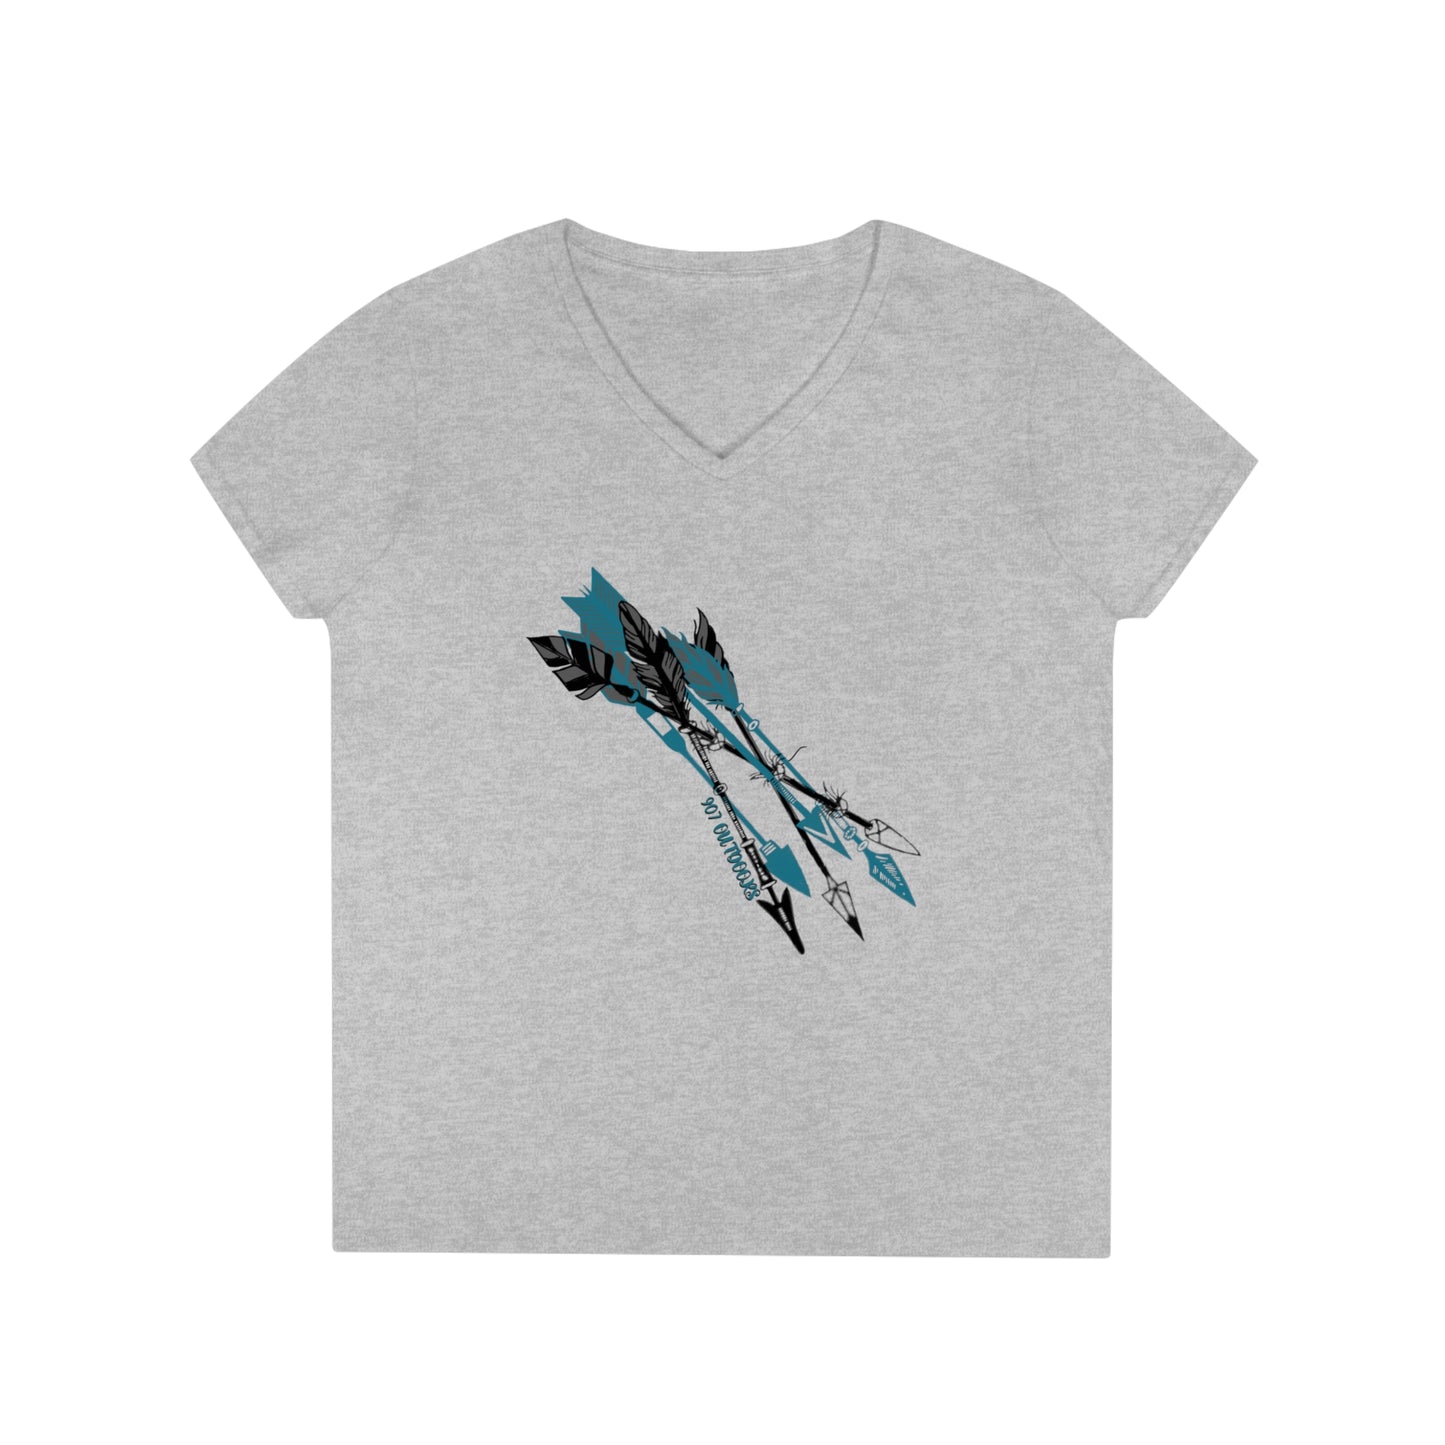 Arrows Ladies' V-Neck T-Shirt